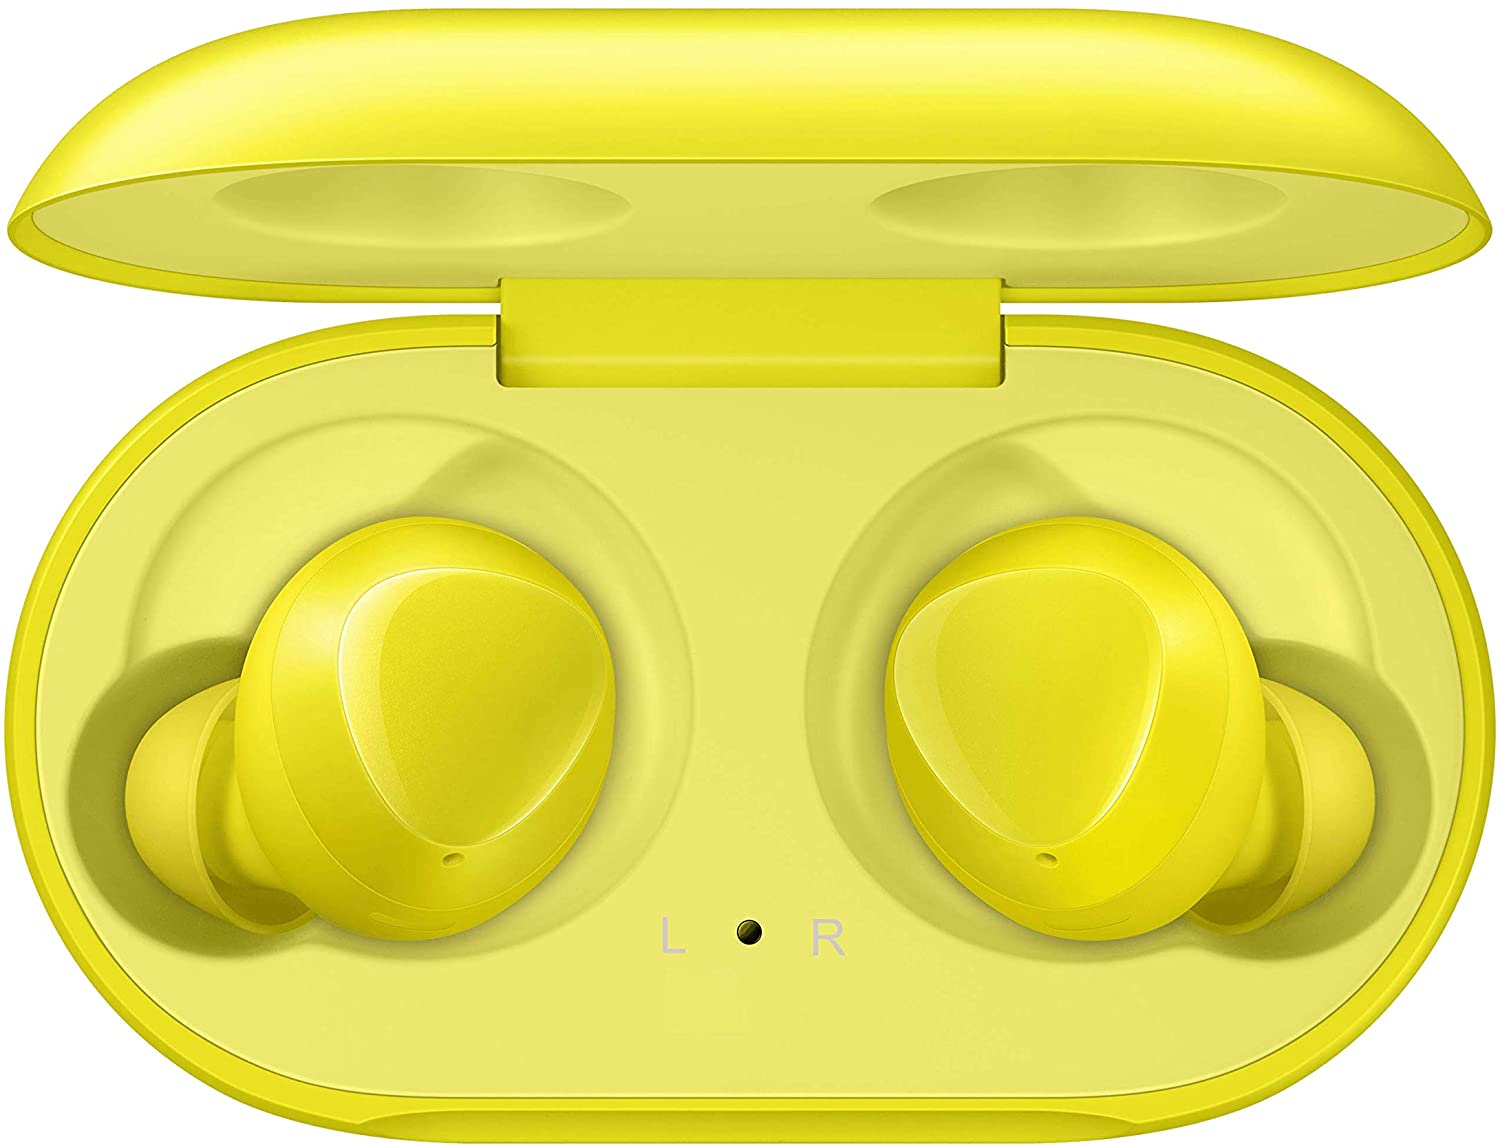 Samsung Galaxy Buds Bluetooth True Wireless Earbuds - Yellow (Certified Refurbished)